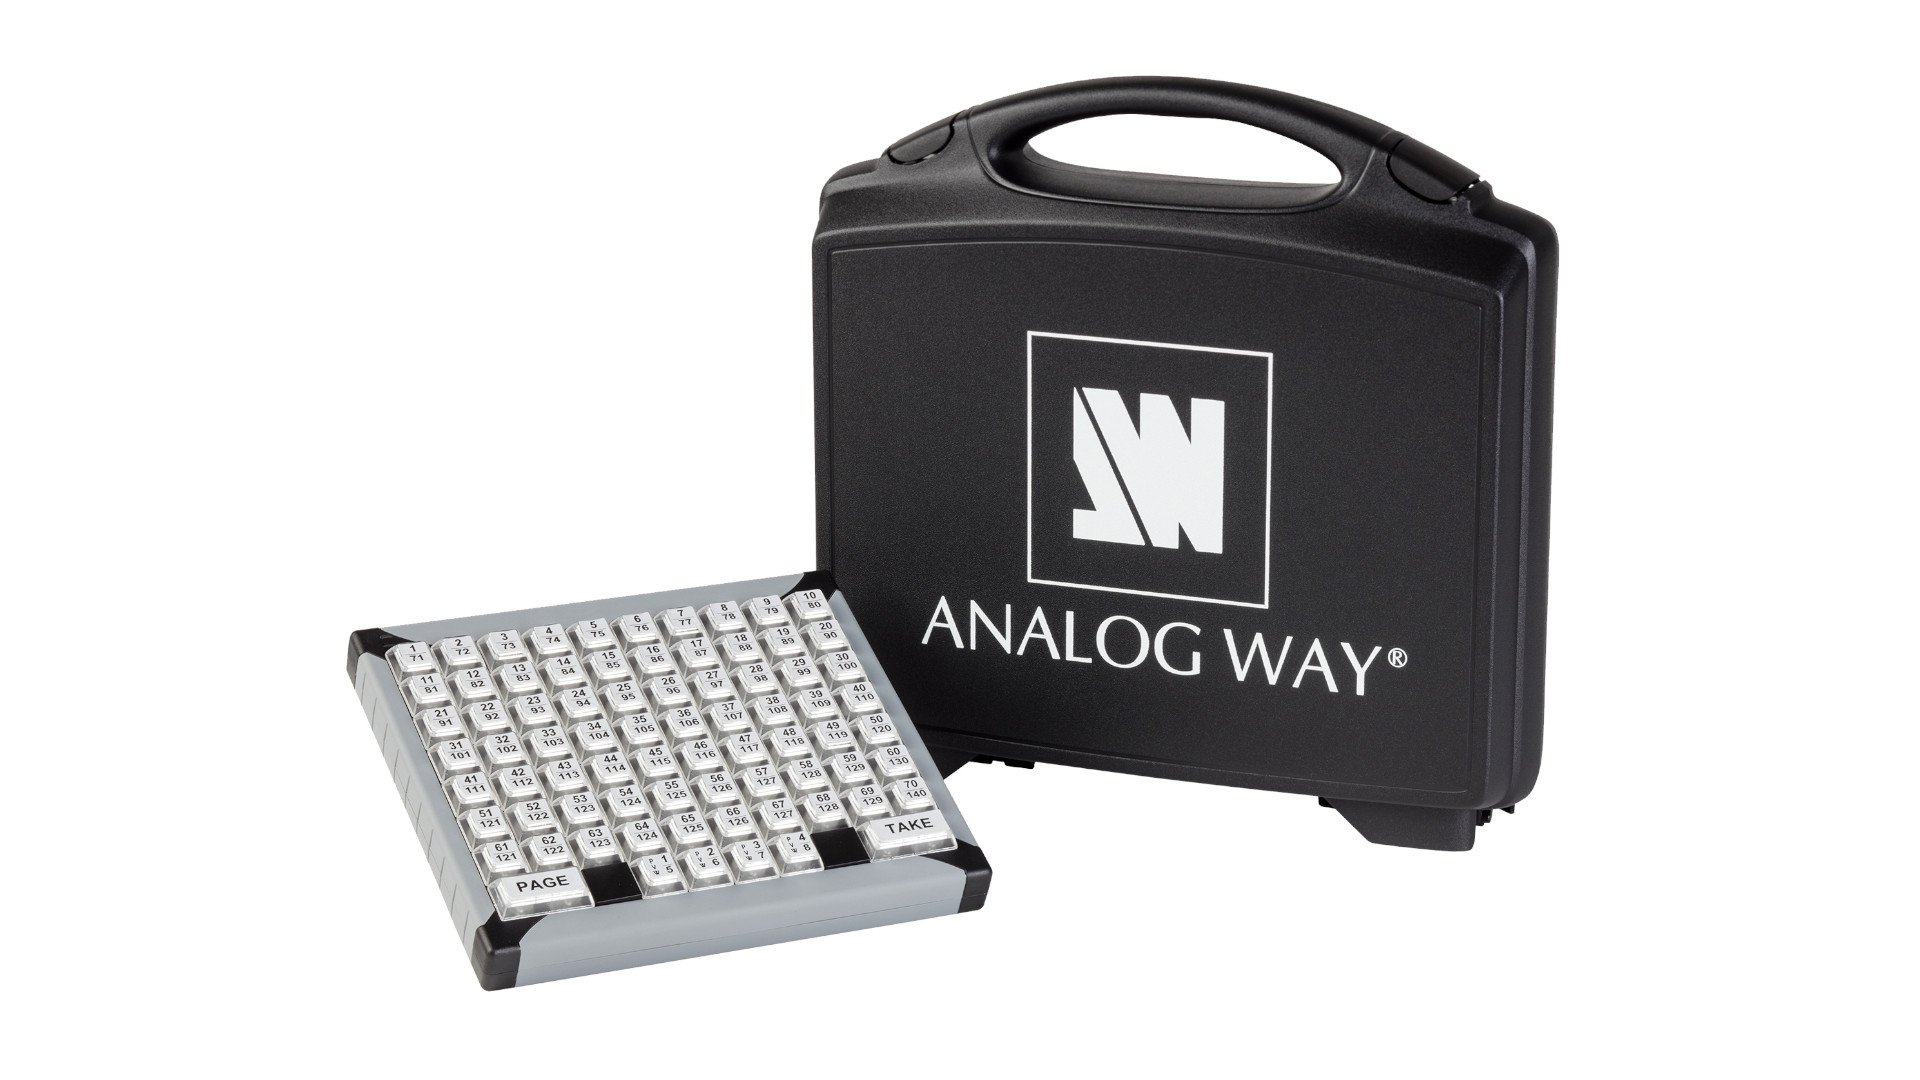 Caja de control Analog Way LiveCore, disponible para alquilar en Novelty Spain